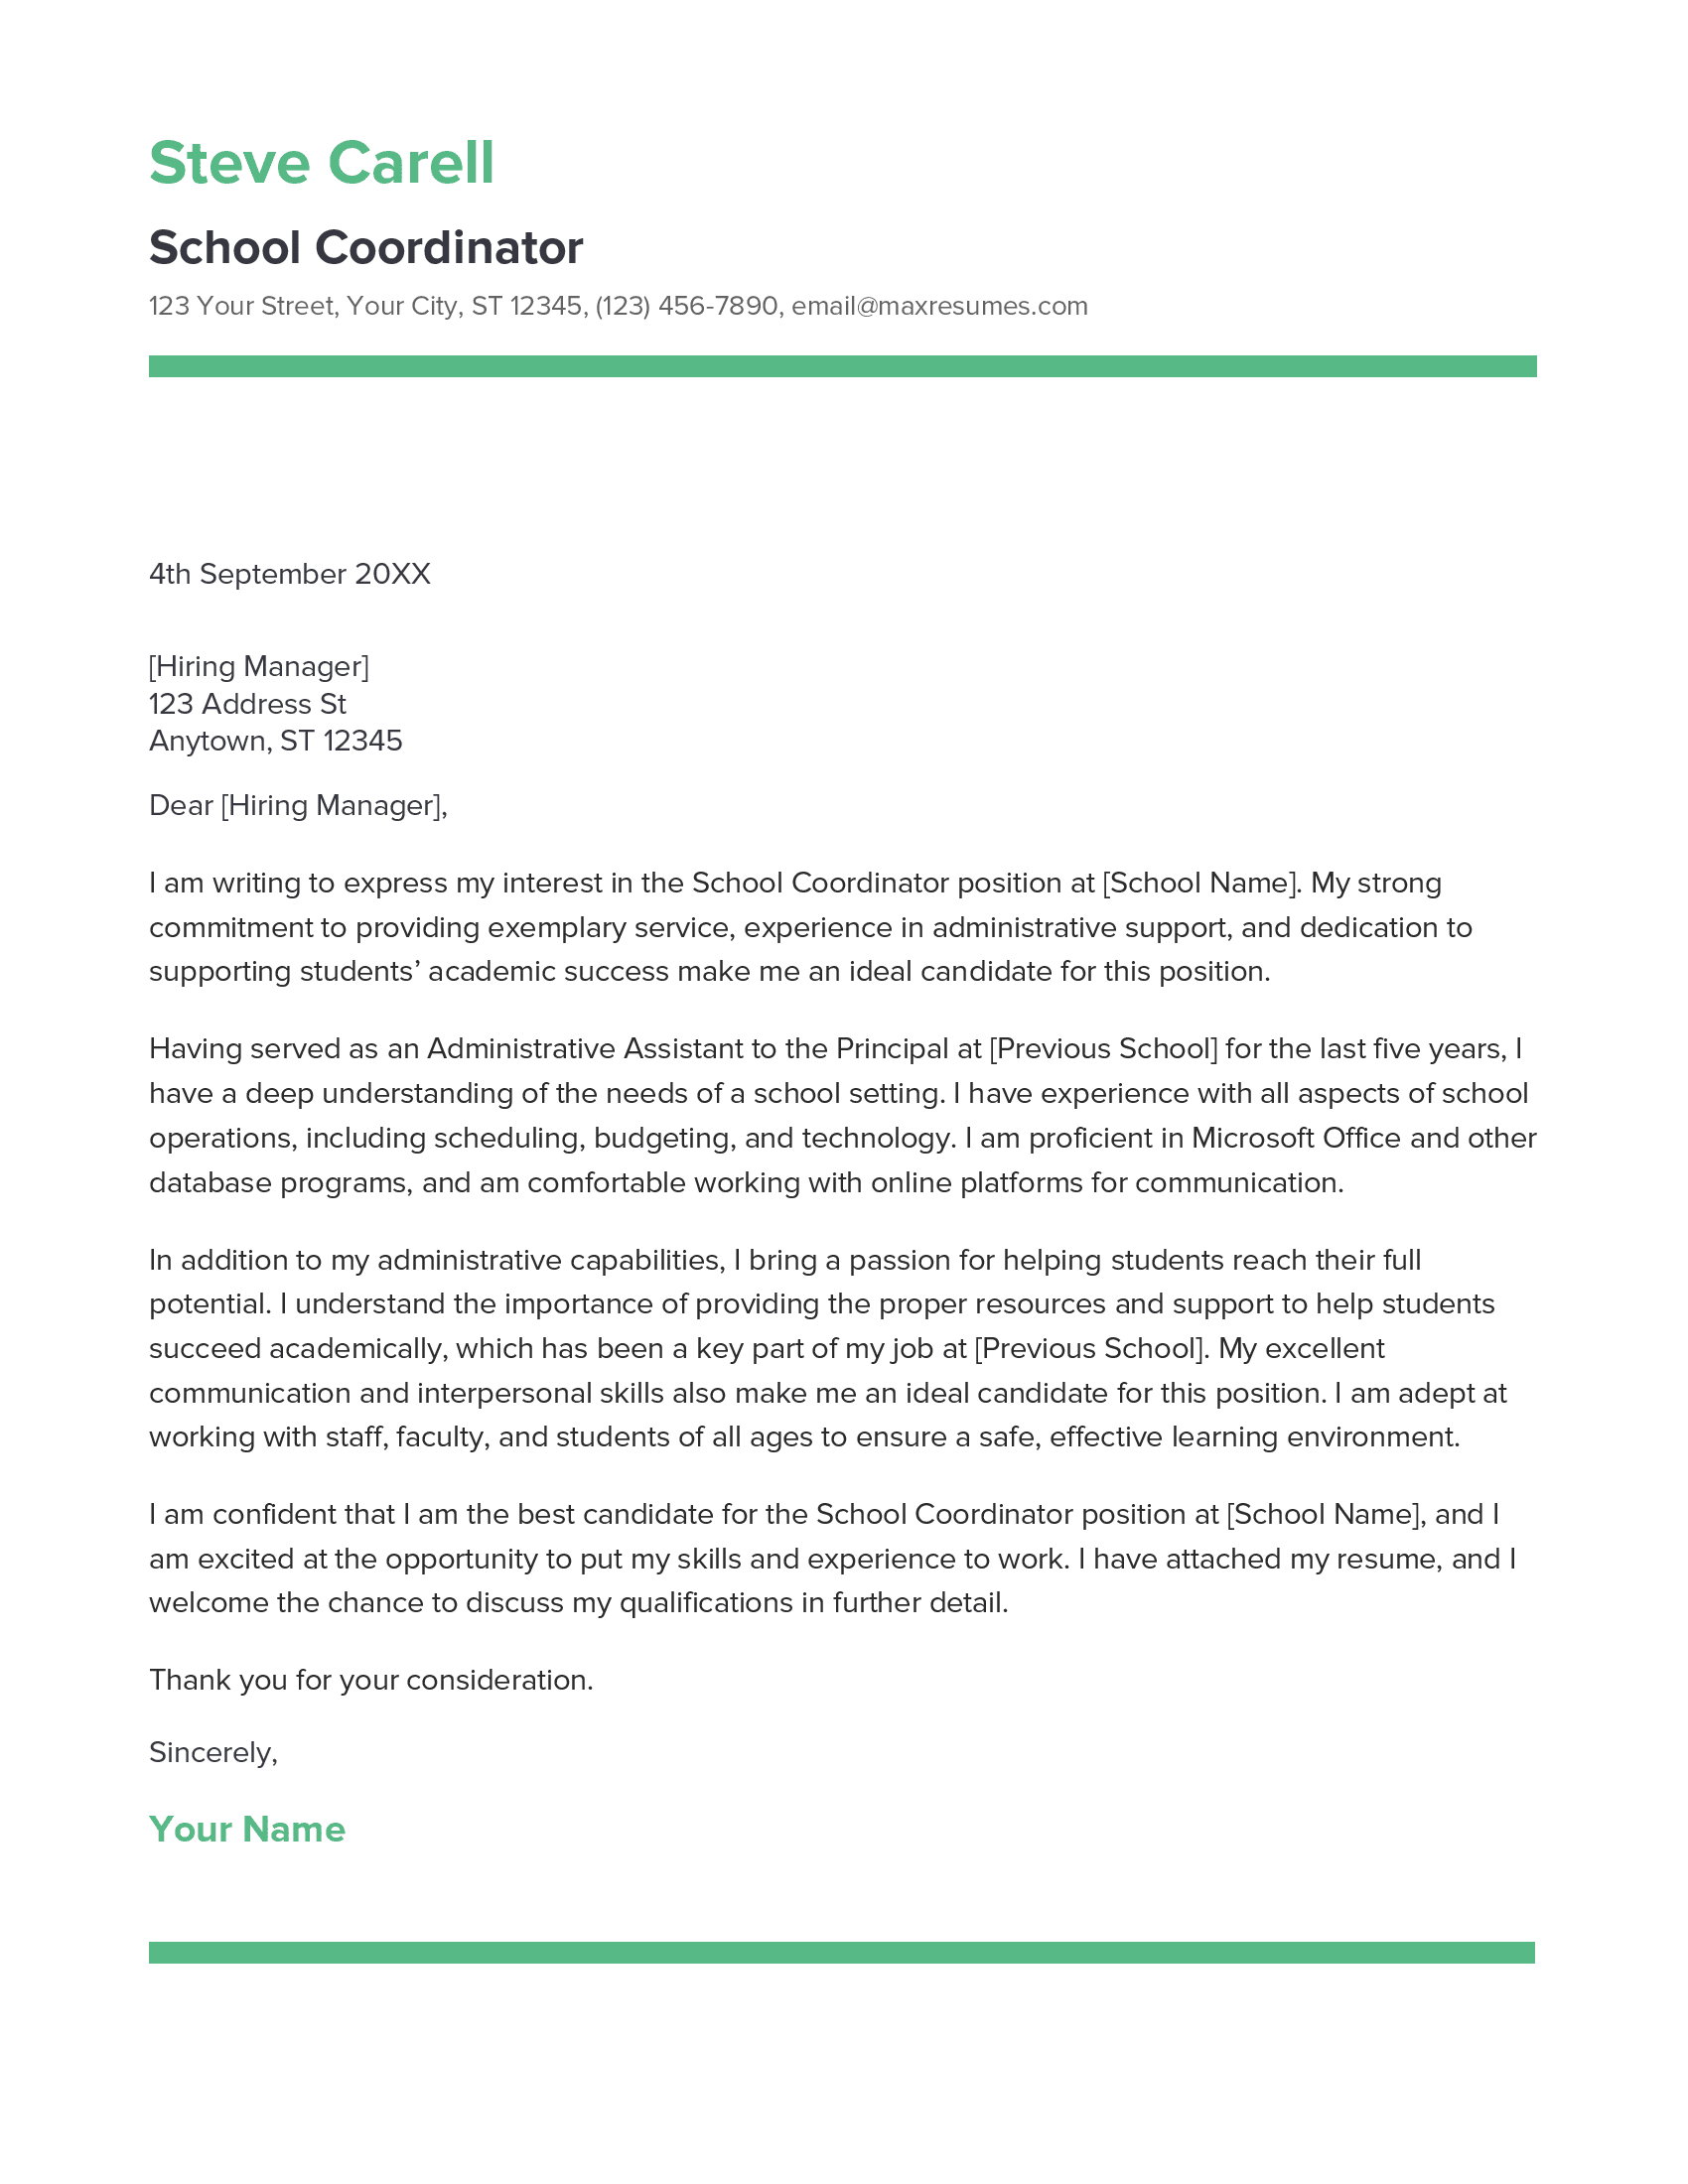 School Coordinator Cover Letter Example